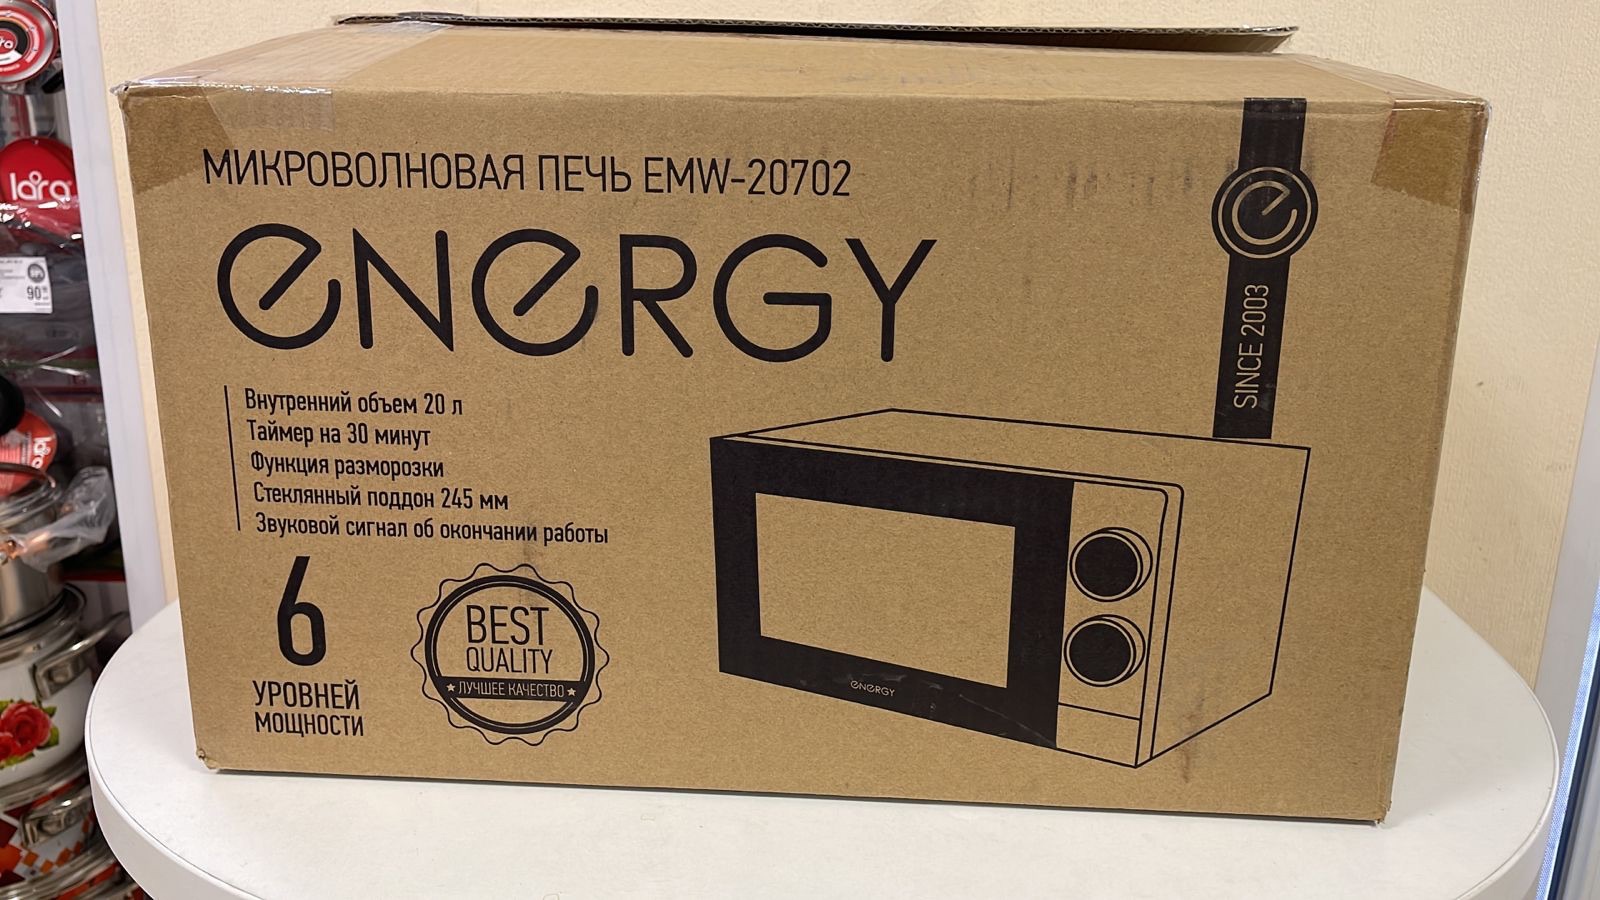   ENERGY EMW-20702, 700